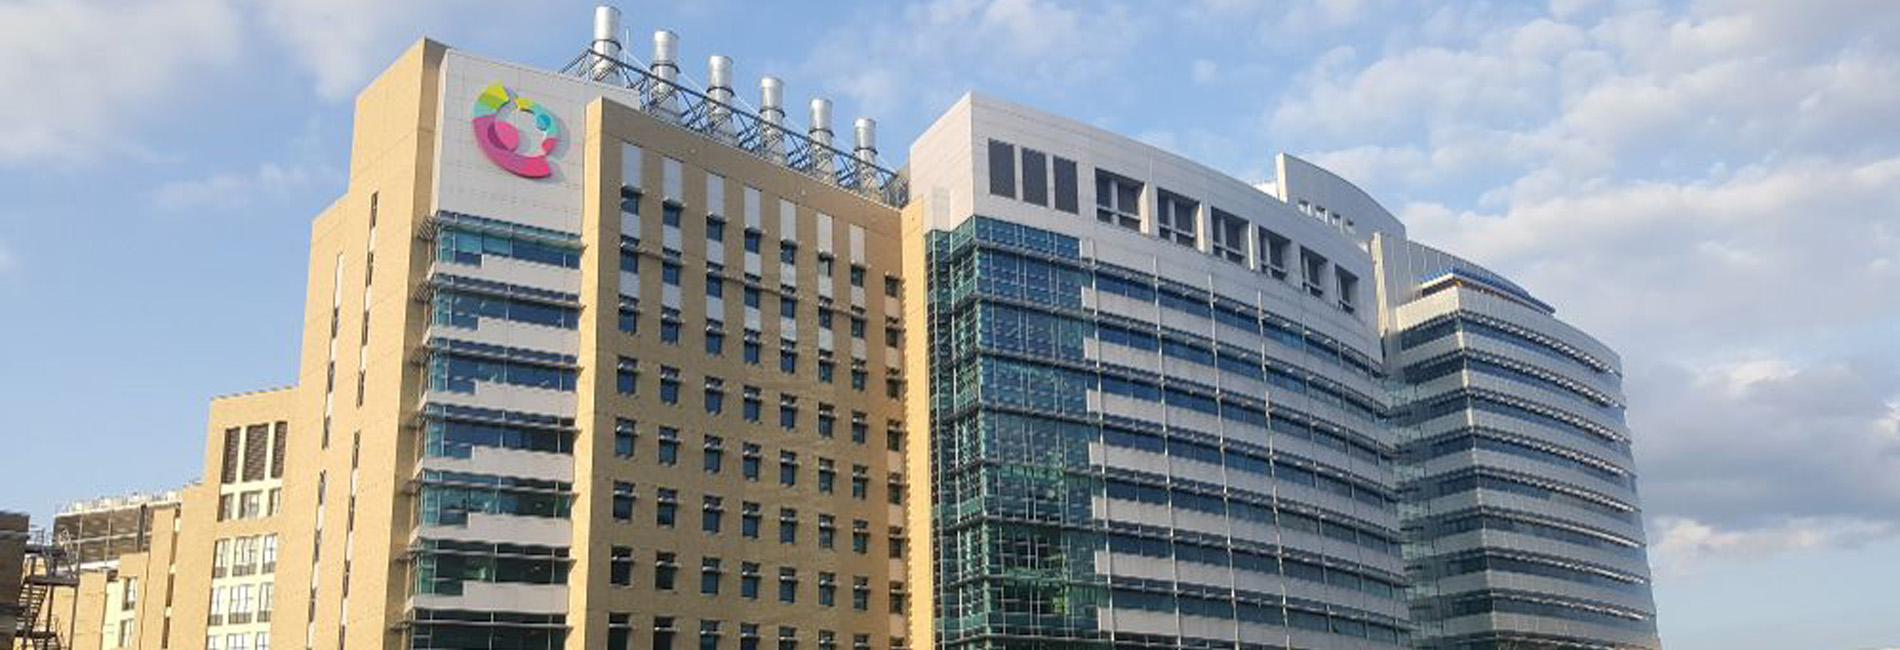 Cincinnati Children's Hospital And Medical Center